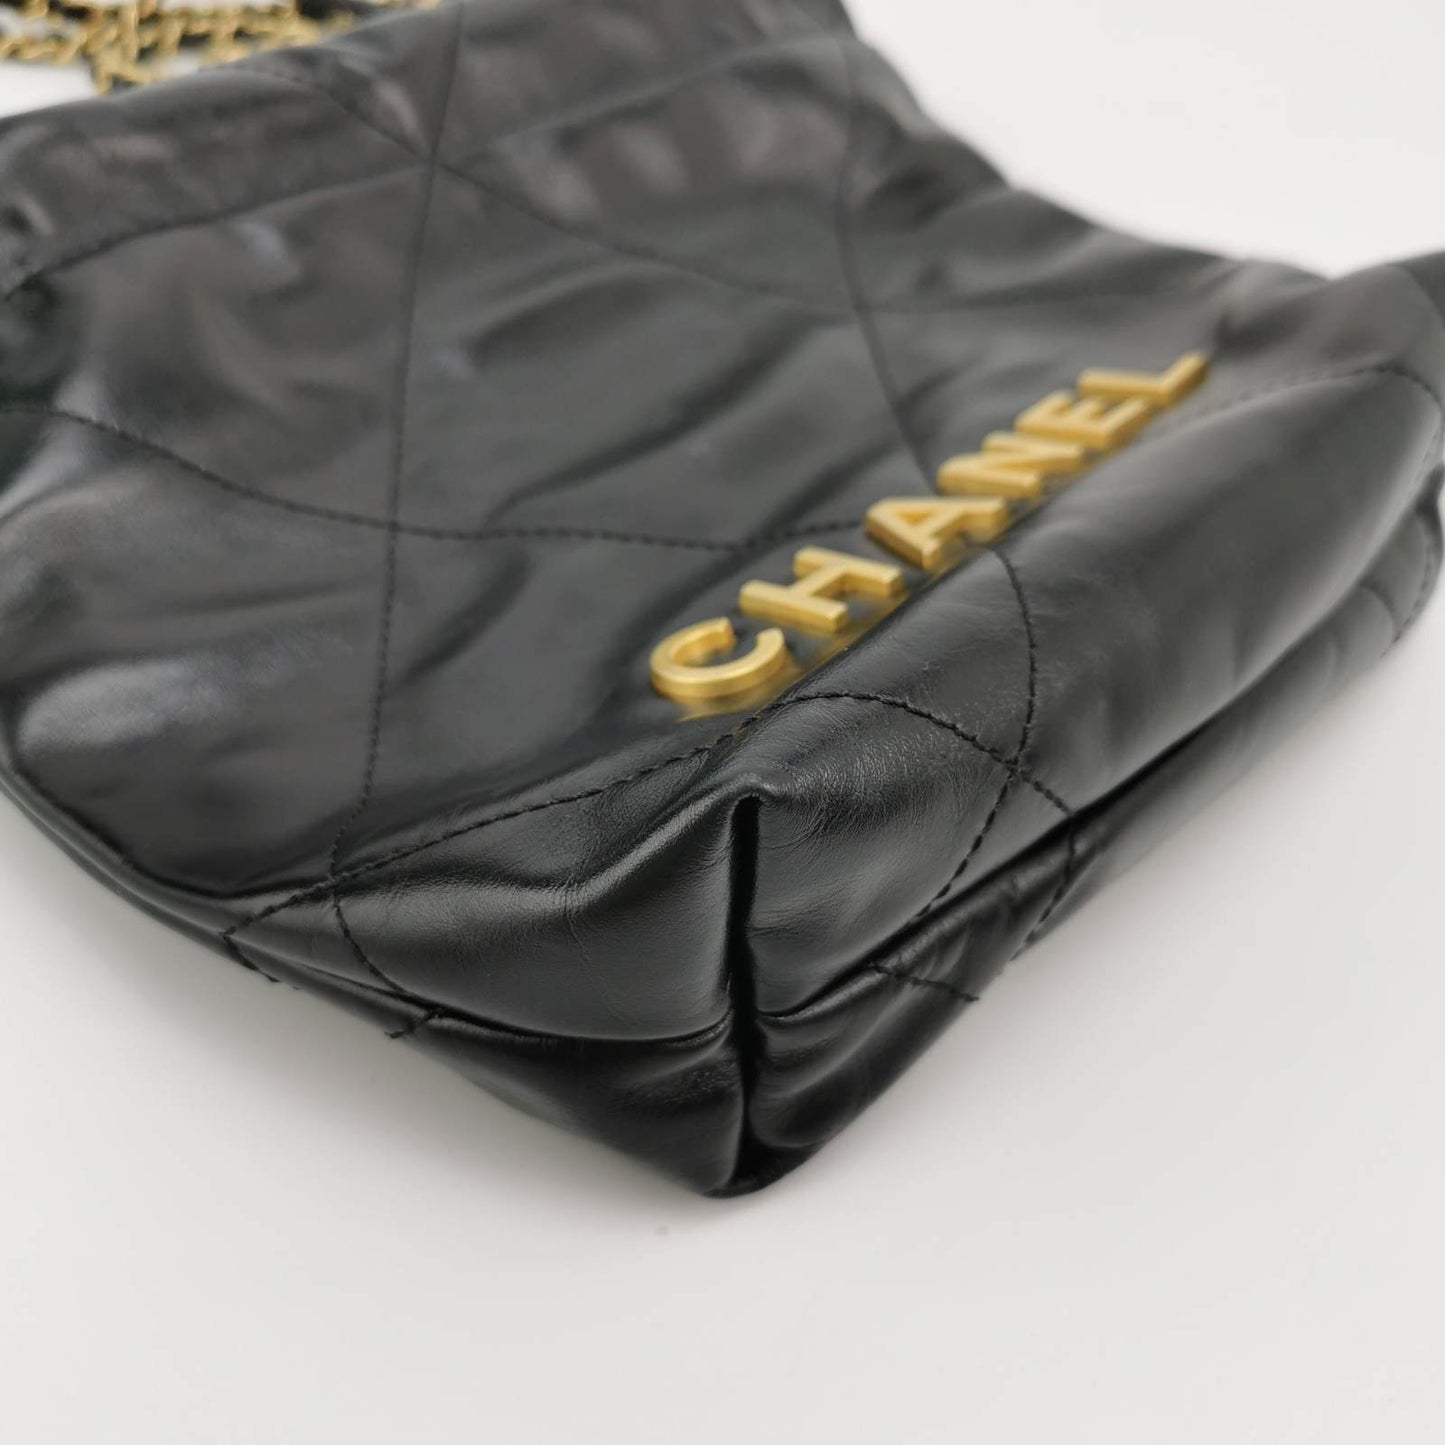 Chanel 22 Hobo Bag Mini Shiny Calfskin Leather Black with Gold-tone Hardware